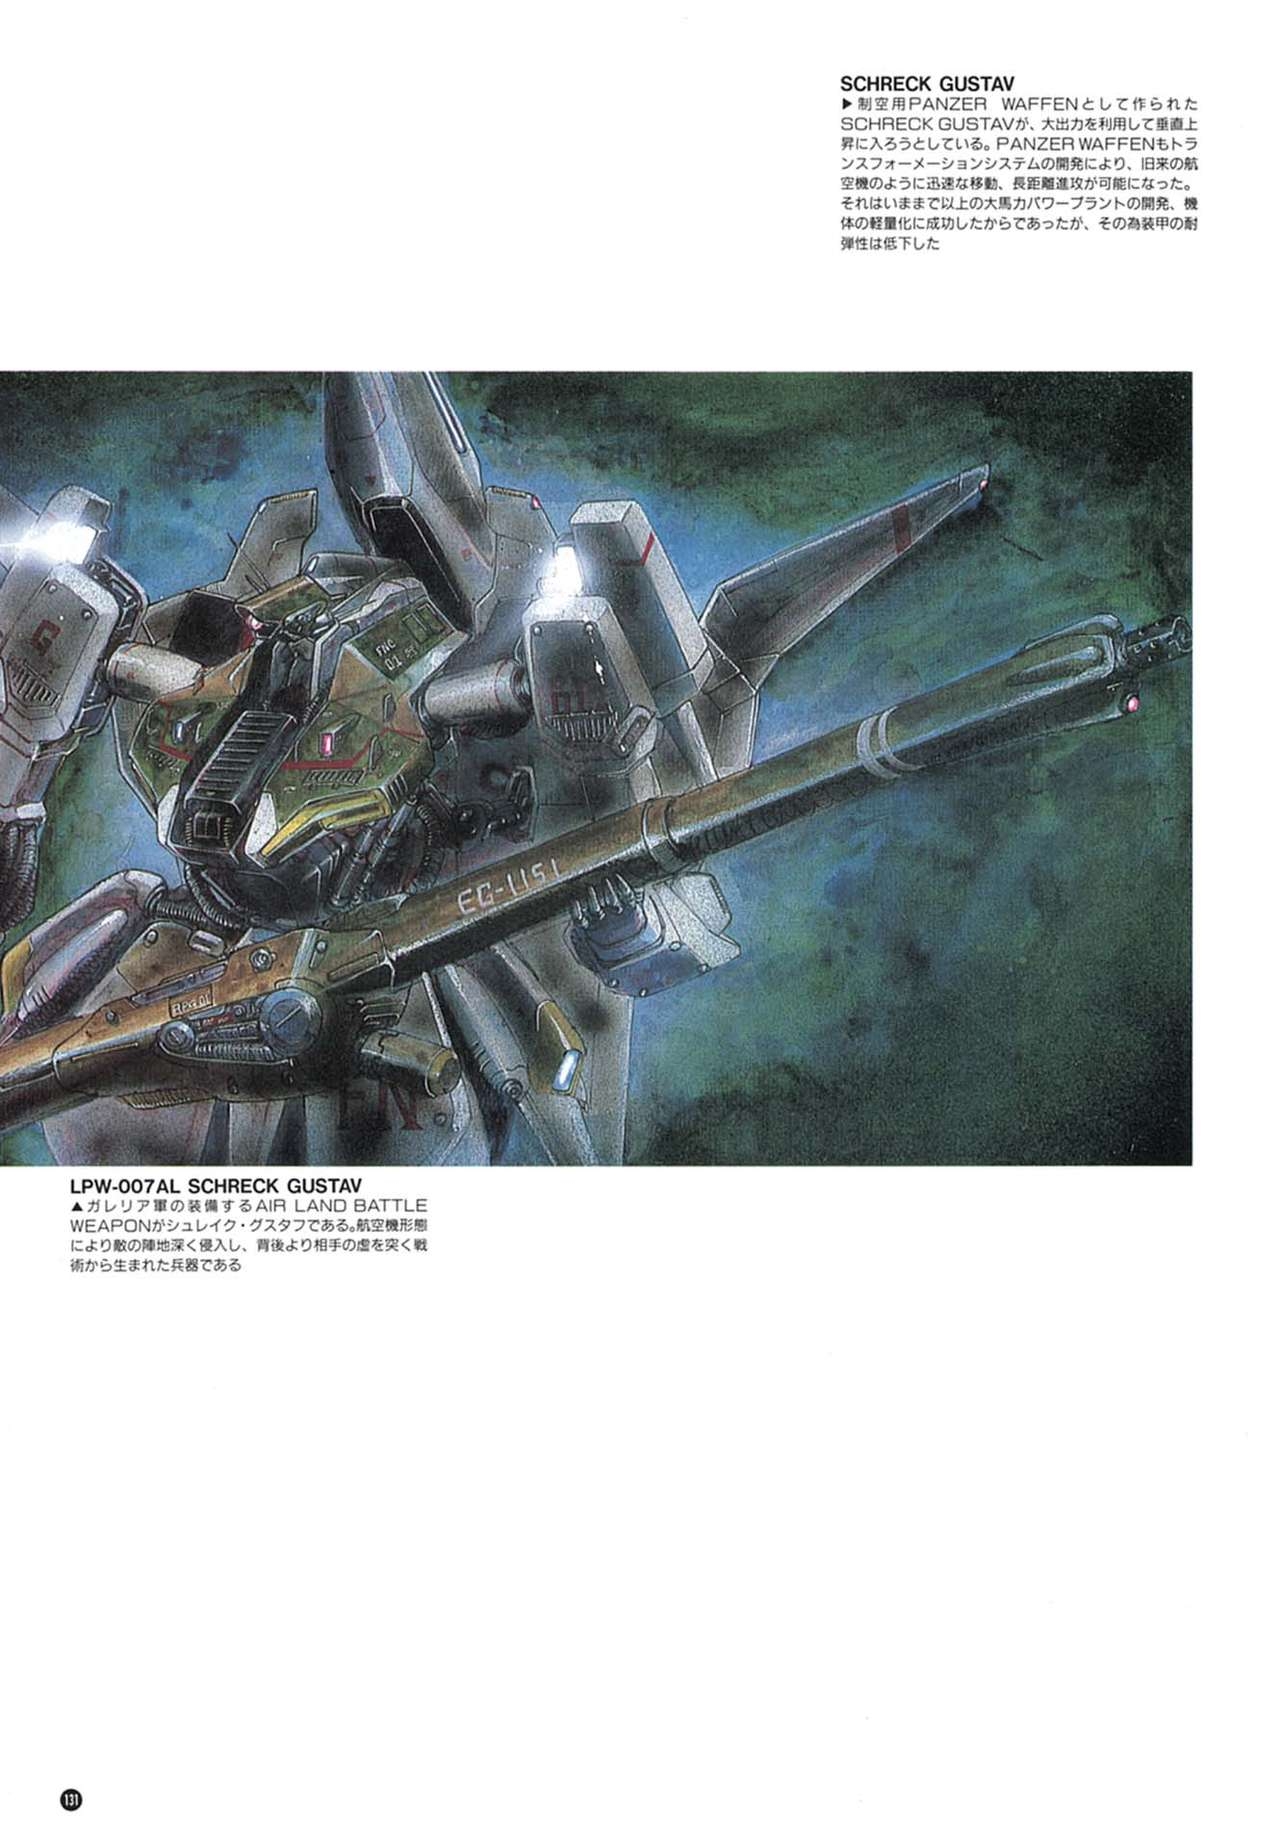 [Kazuhisa Kondo] Kazuhisa Kondo 2D & 3D Works - Go Ahead - From Mobile Suit Gundam to Original Mechanism 130